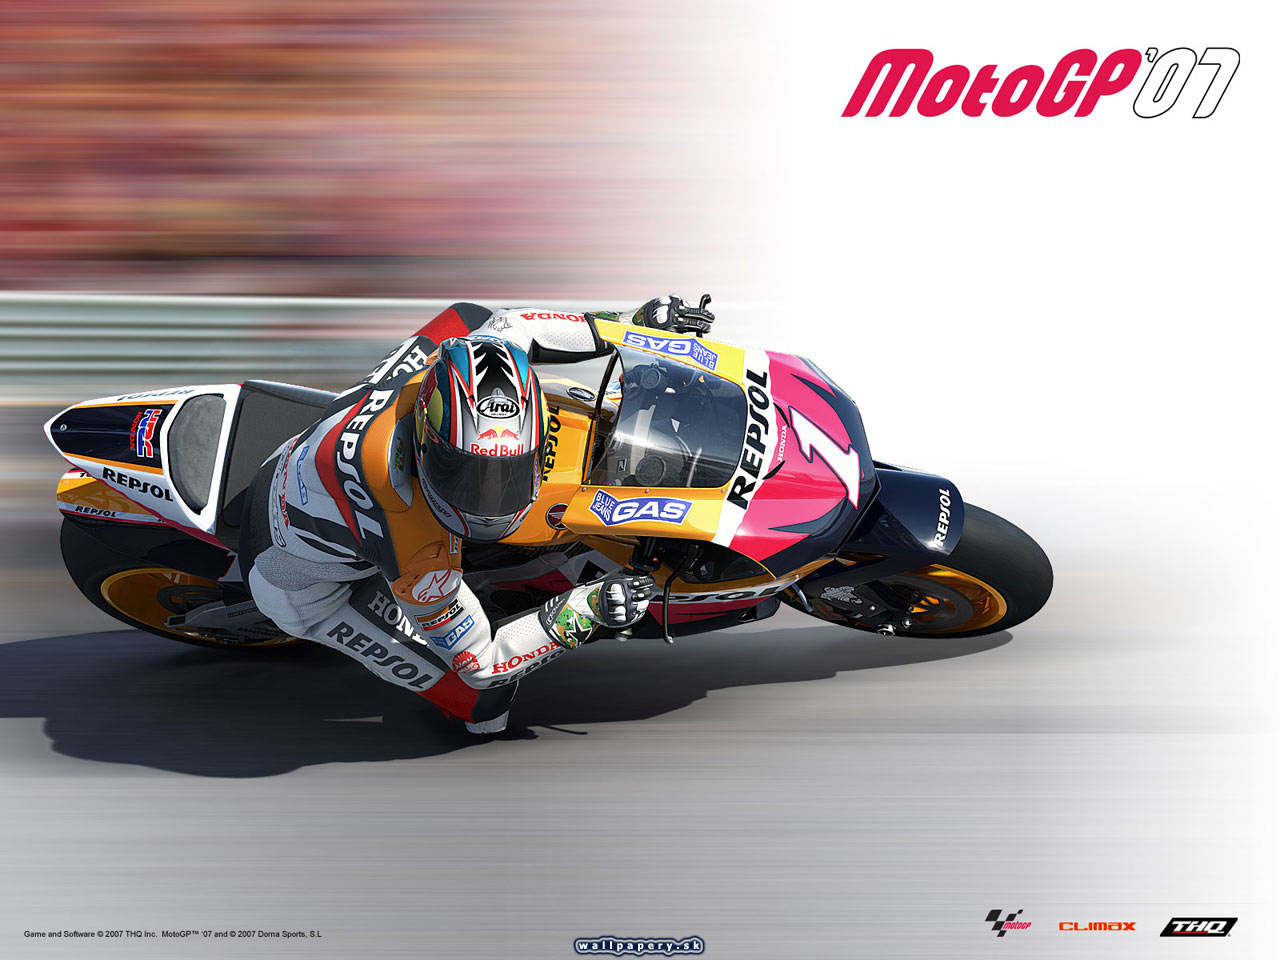 MotoGP 07 - wallpaper 9